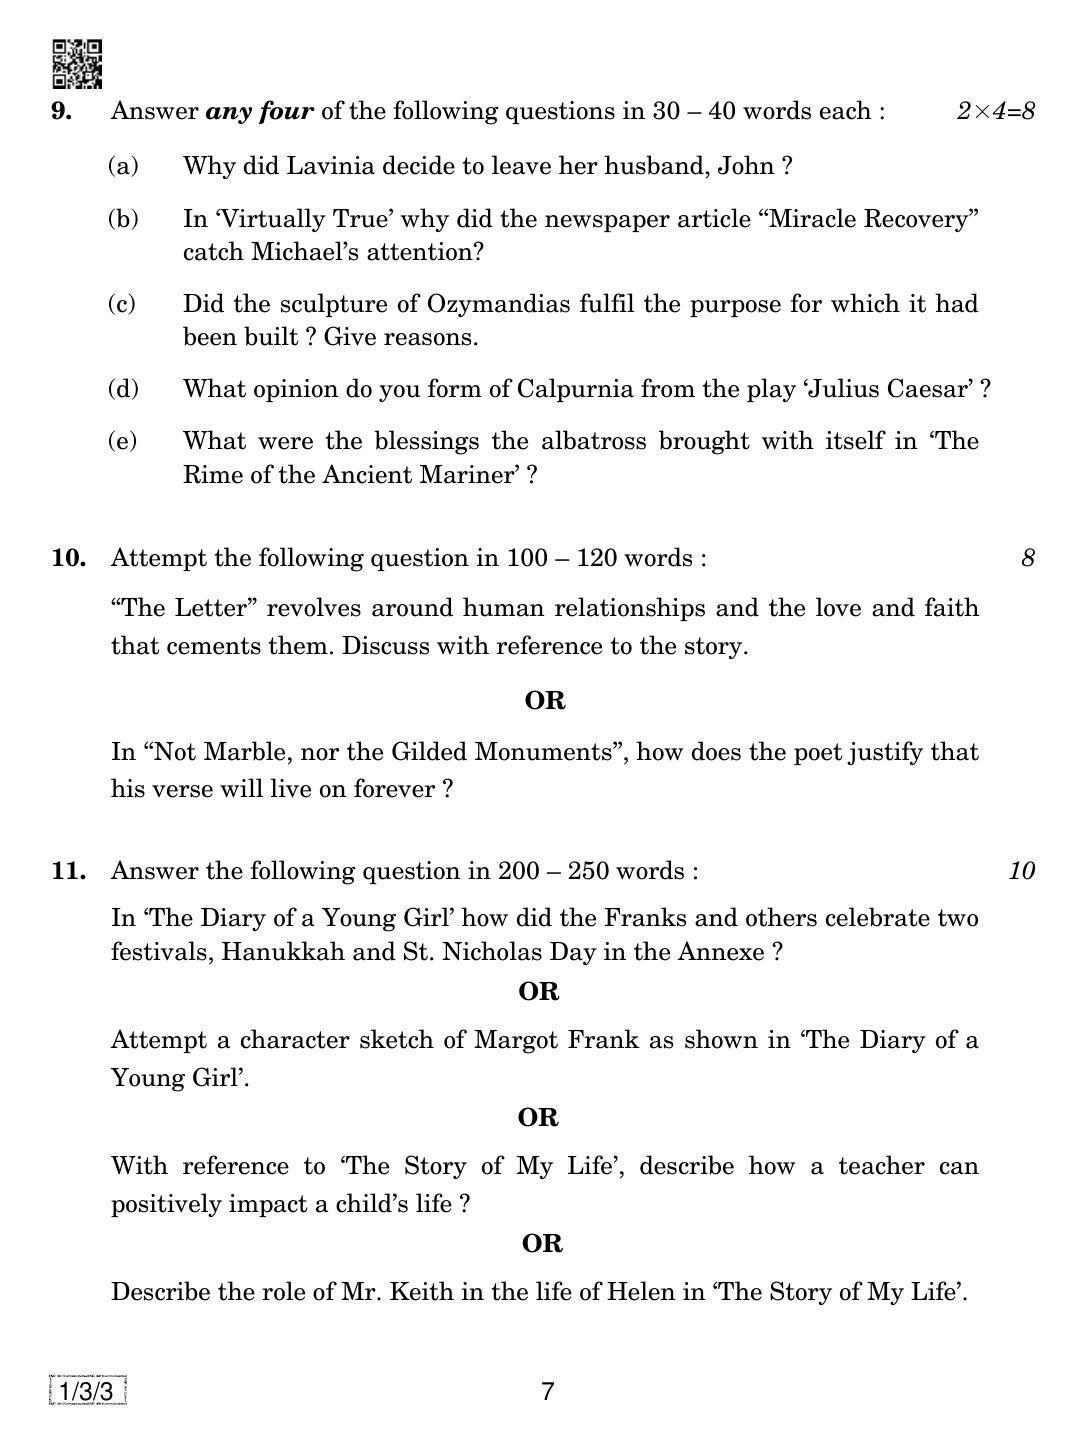 CBSE Class 10 1-3-3 ENGLISH COMMUNICATIVE 2019 Question Paper - Page 7